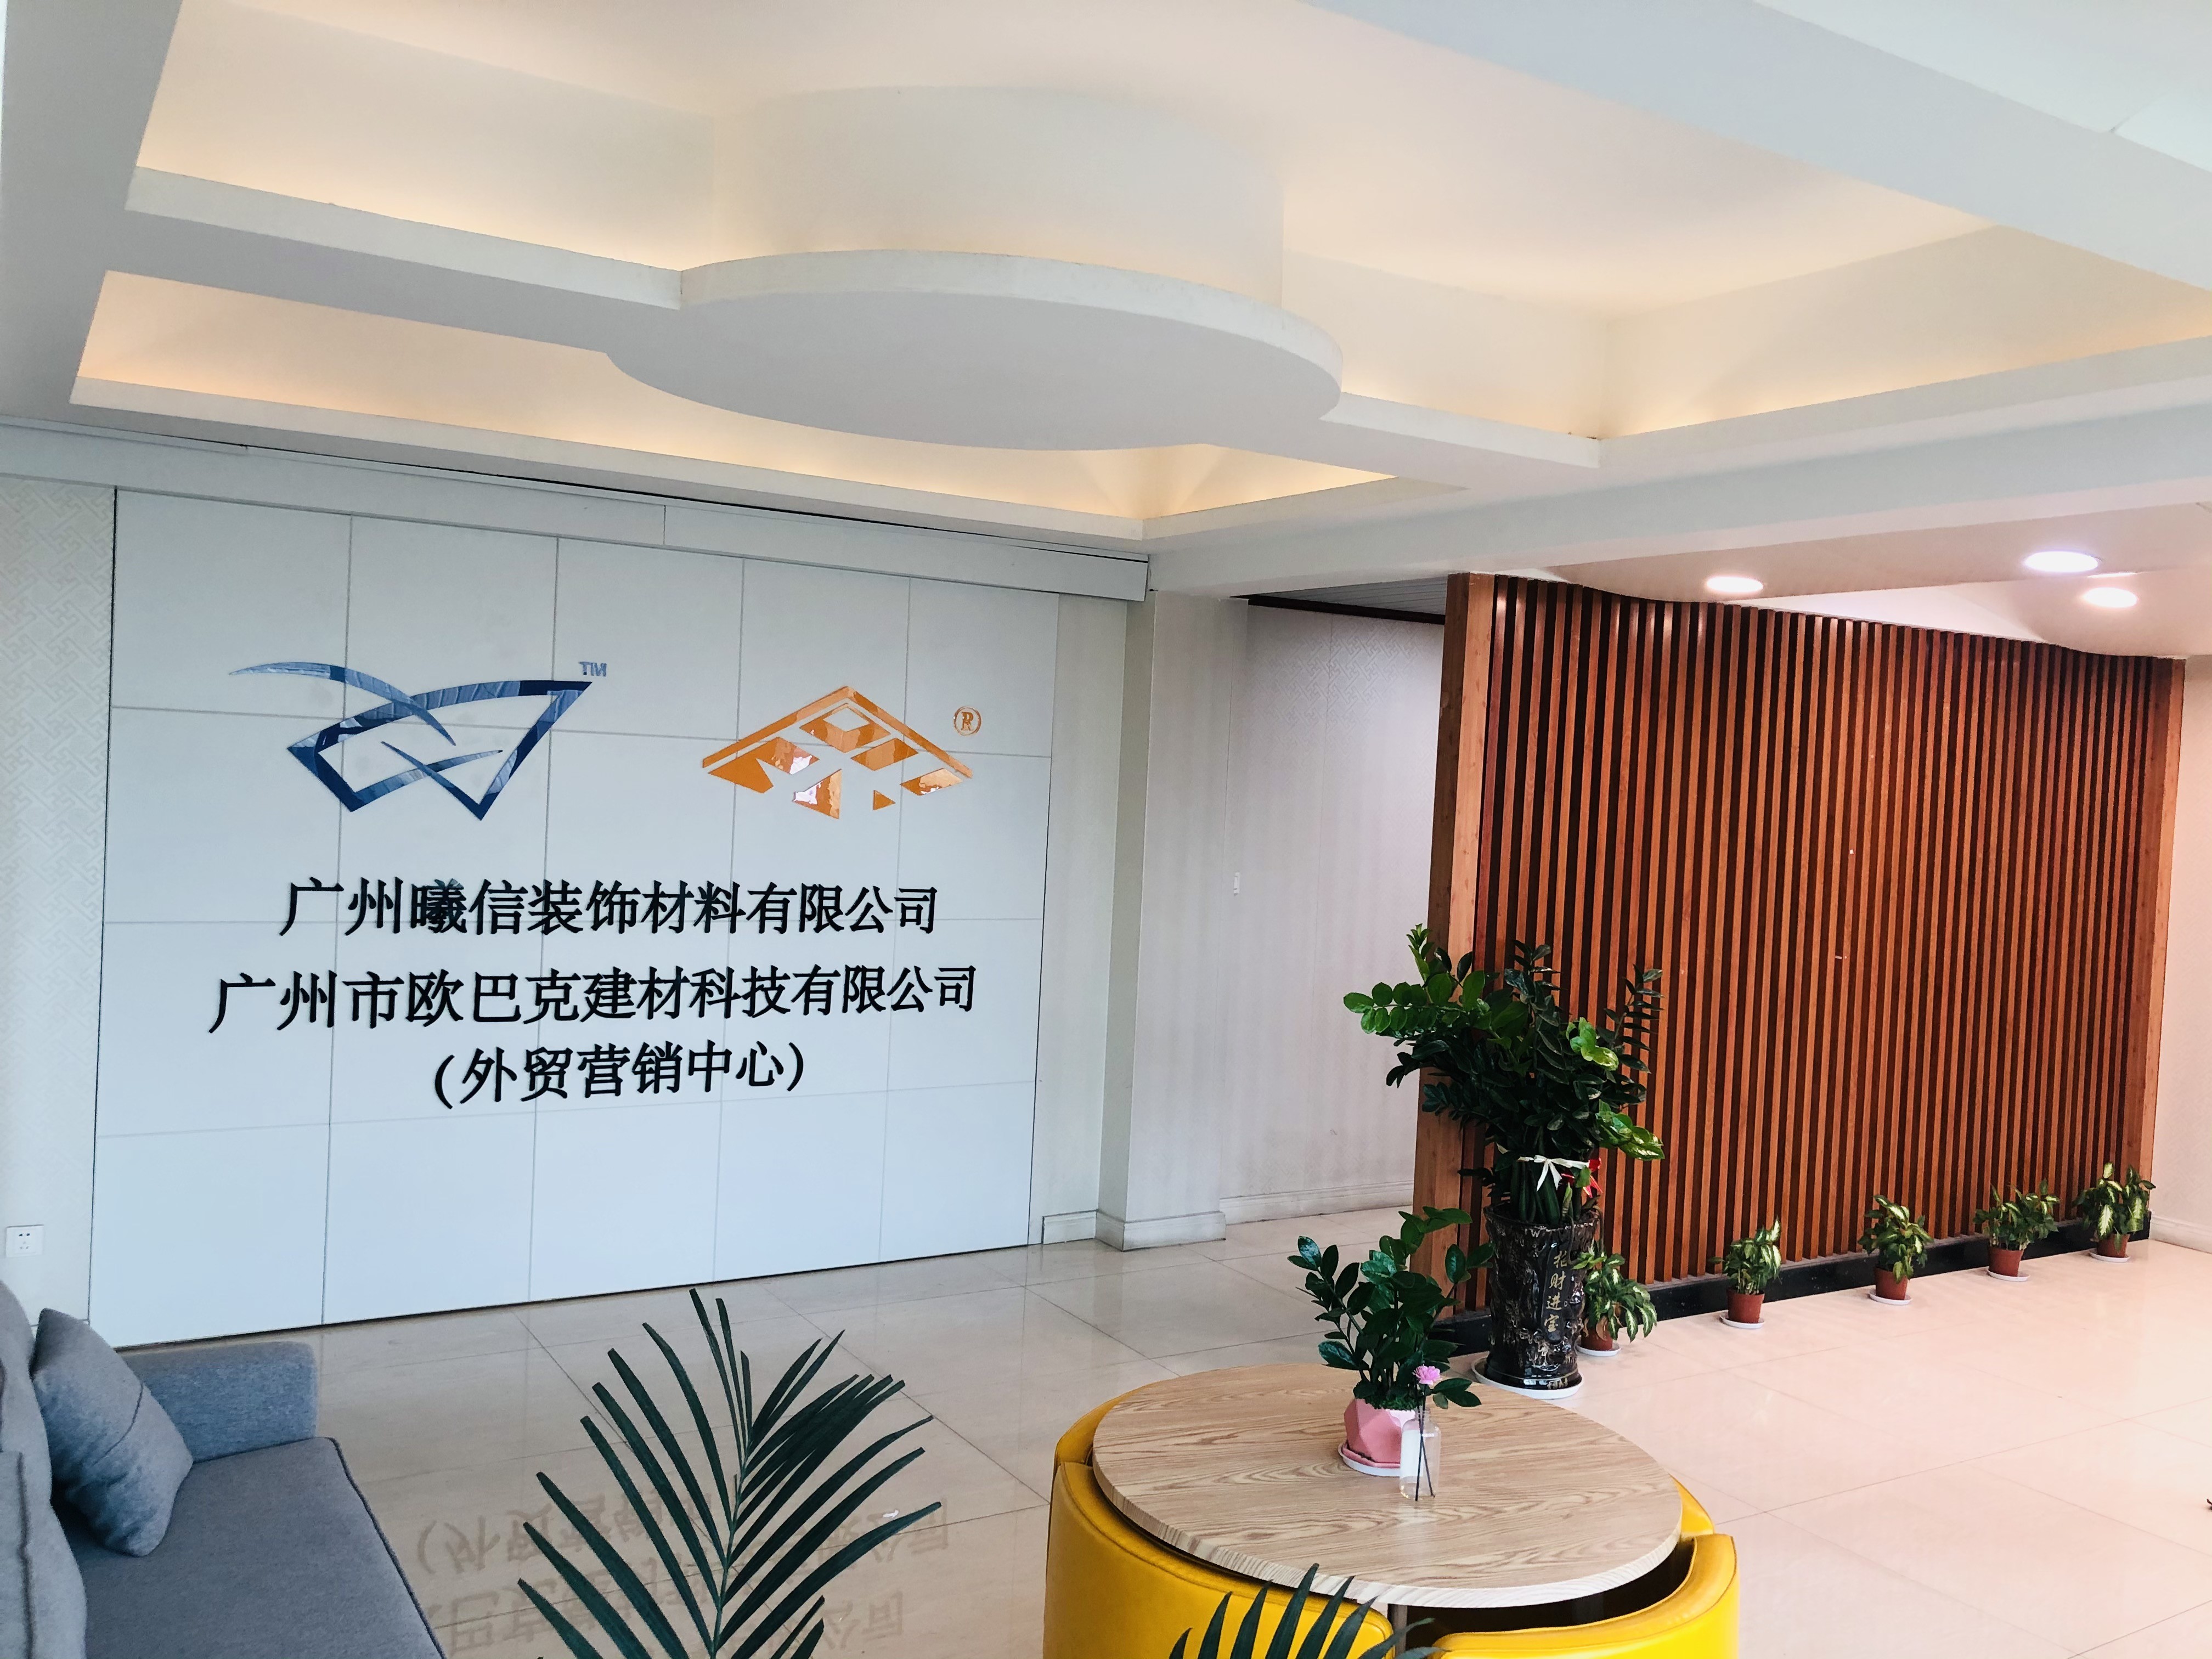 China Guangzhou Season Decoration Materials Co., Ltd. Unternehmensprofil